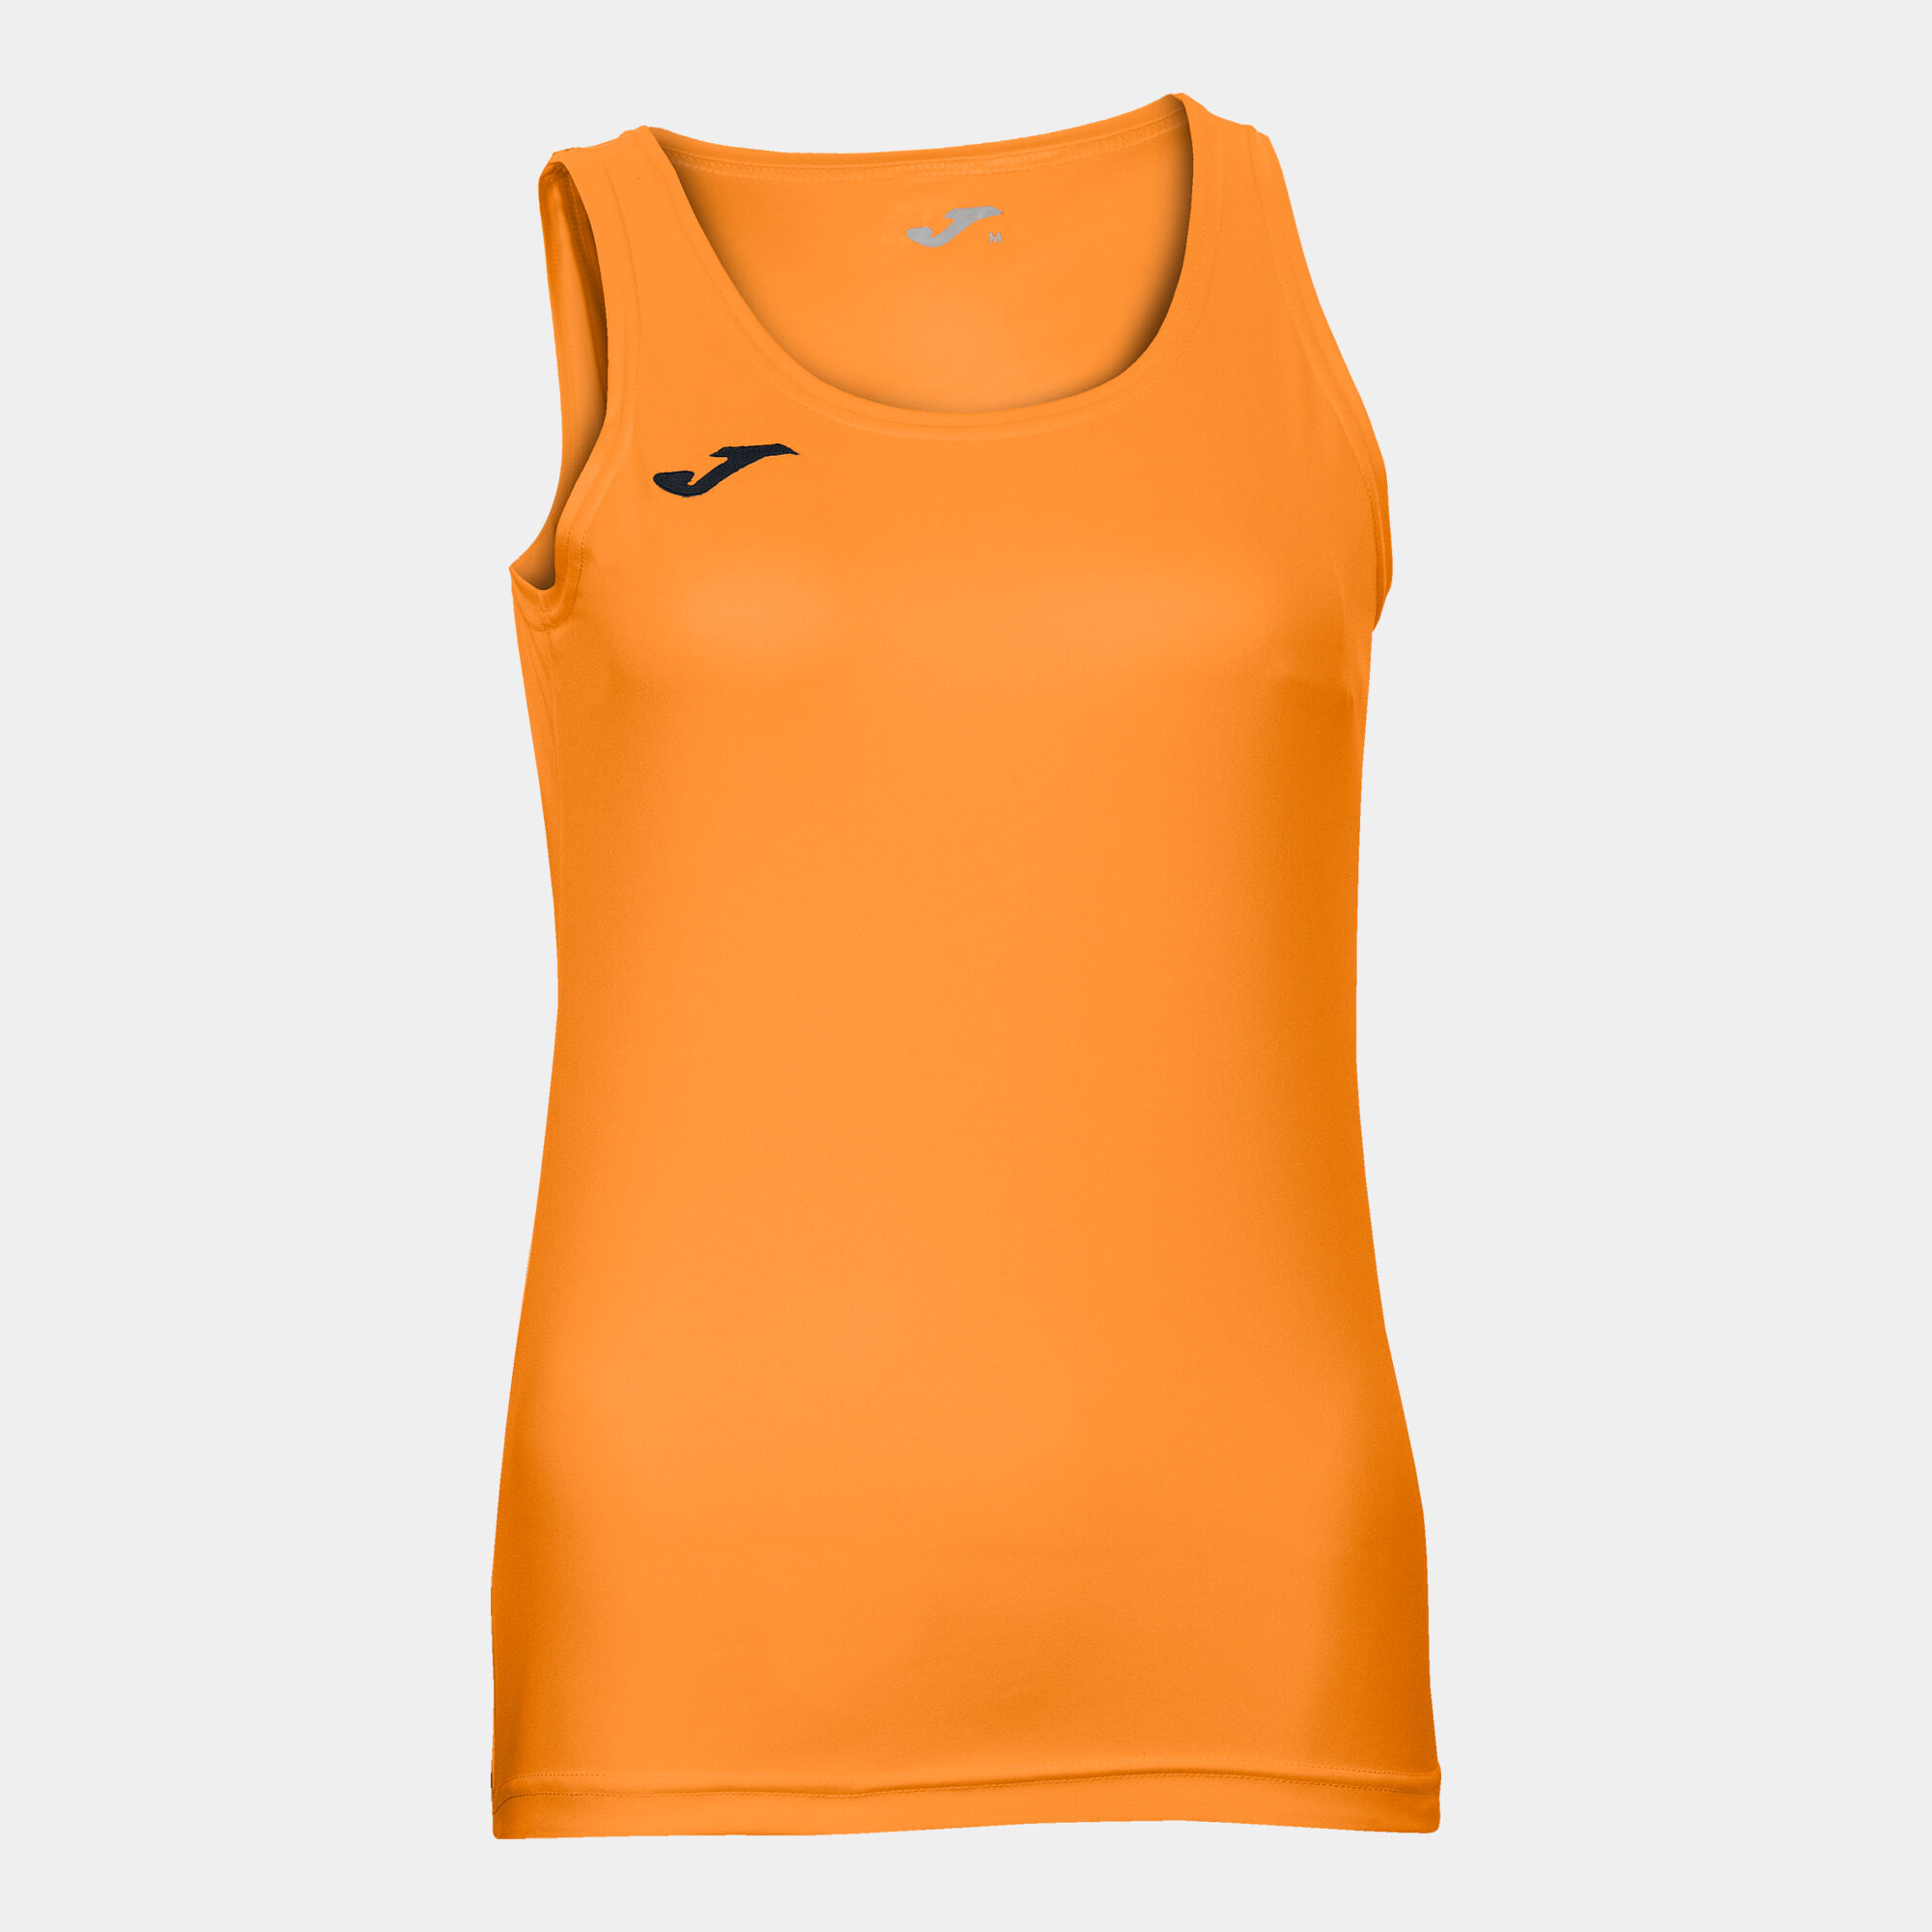 Camiseta sin mangas mujer Diana naranja flúor